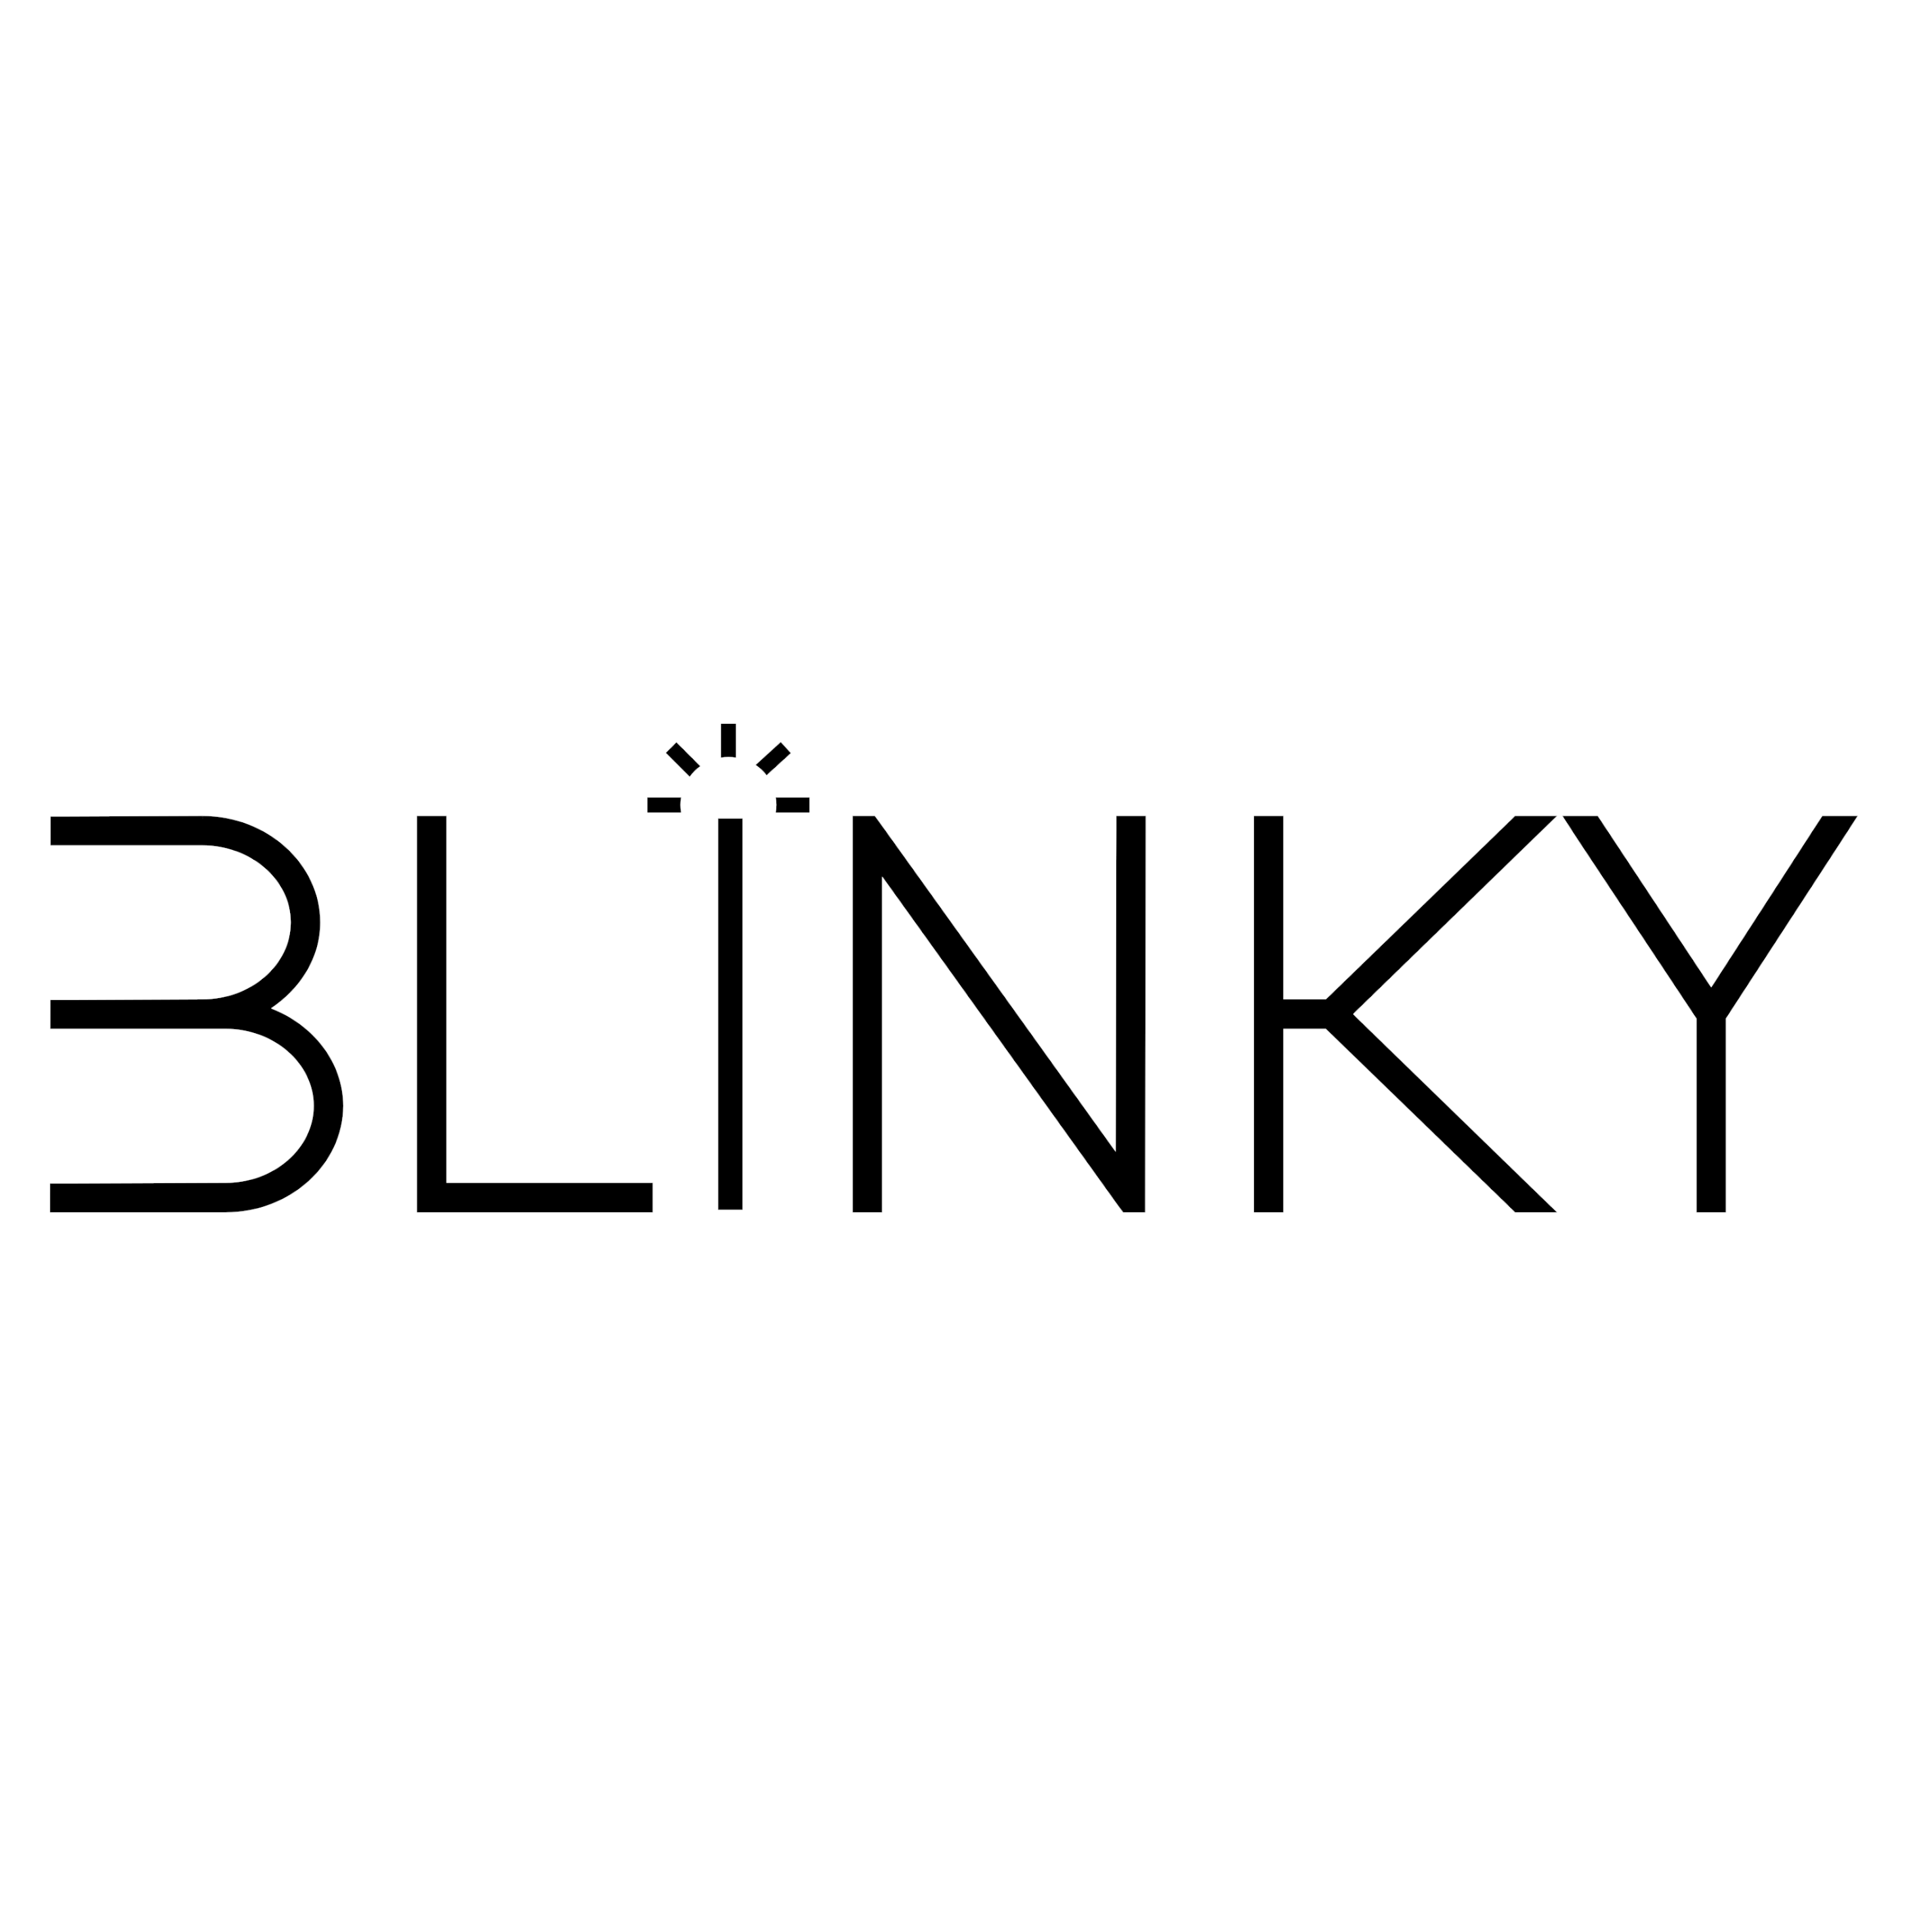 Blinky: Turn and brake indicators